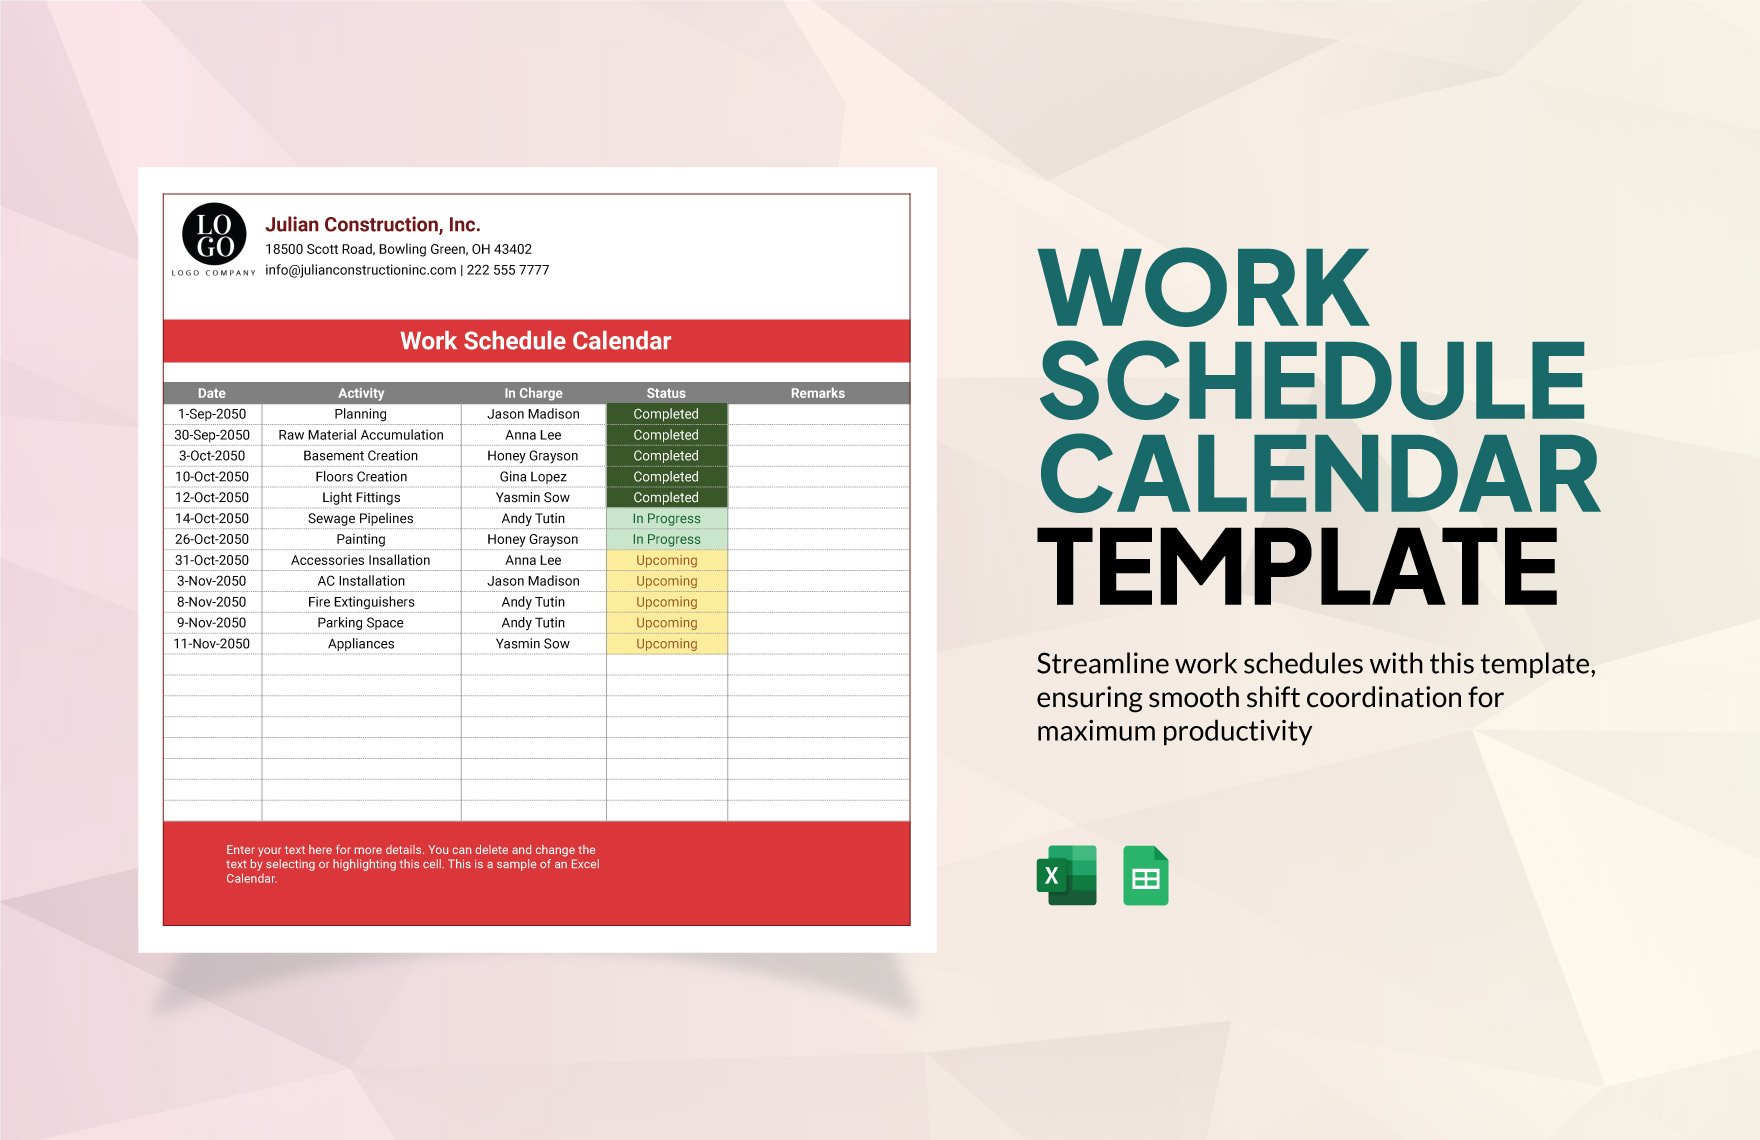 Free Work Schedule Calendar